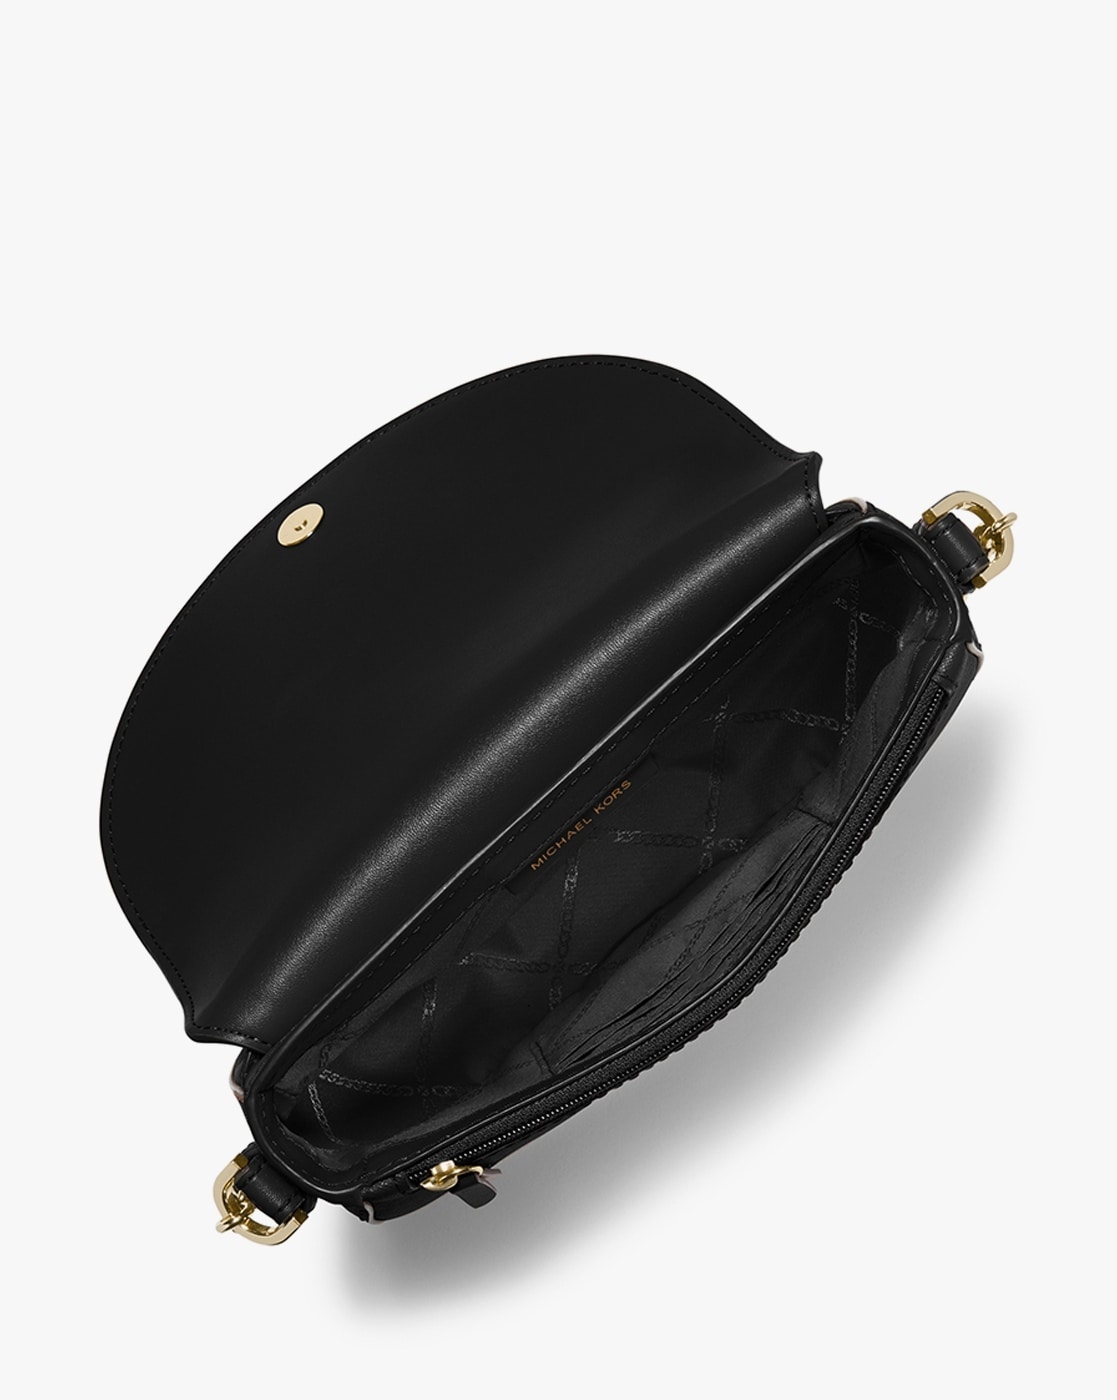 Michael Kors Jet Set Large Saffiano Leather Crossbody Bag - Black/Gold •  Price »